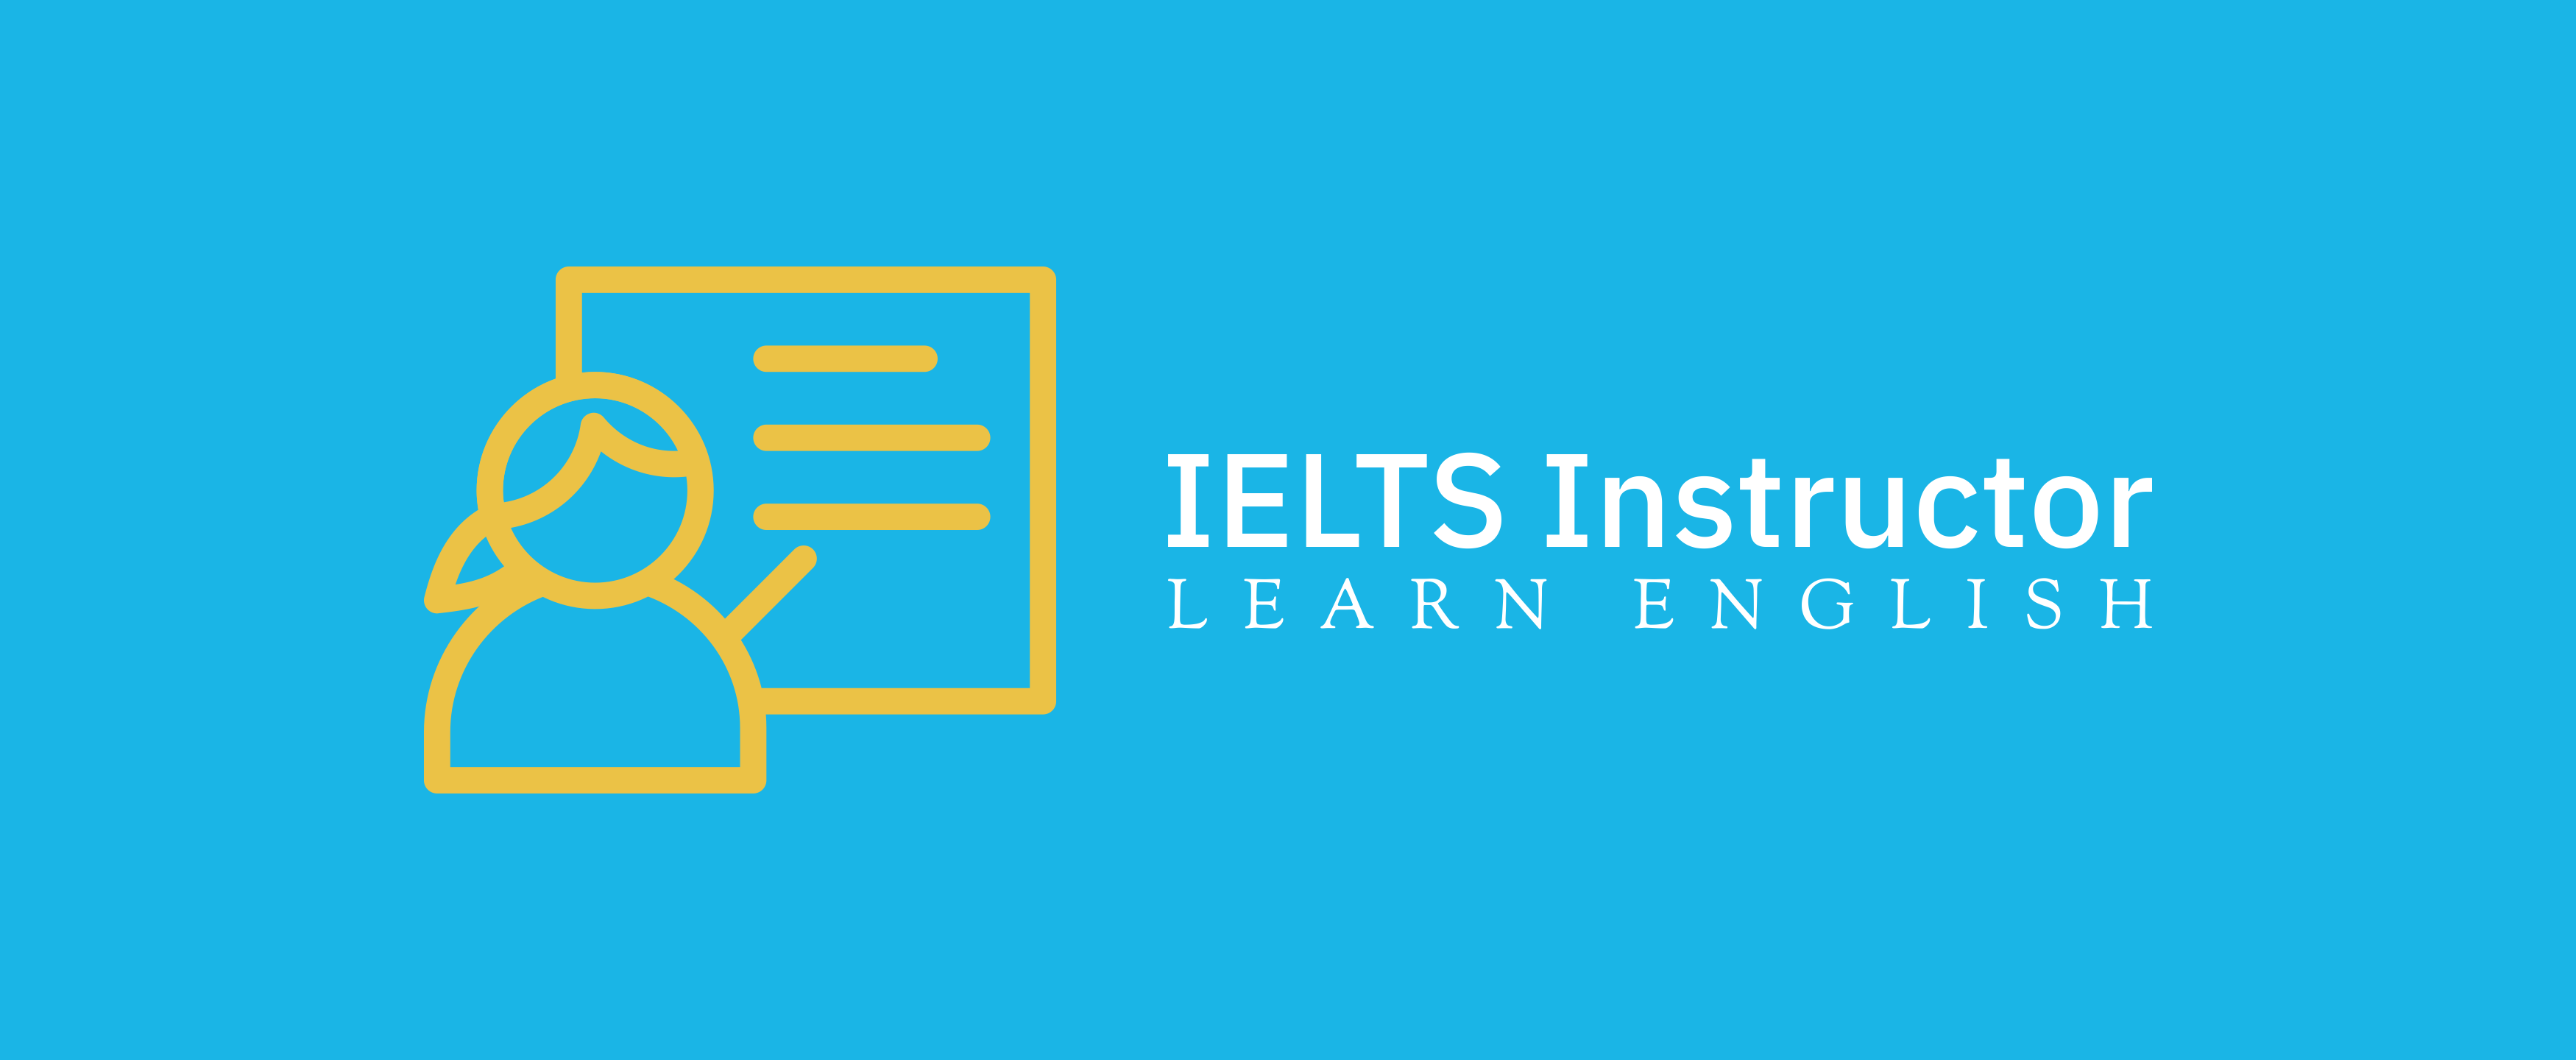 IELTS Instructor